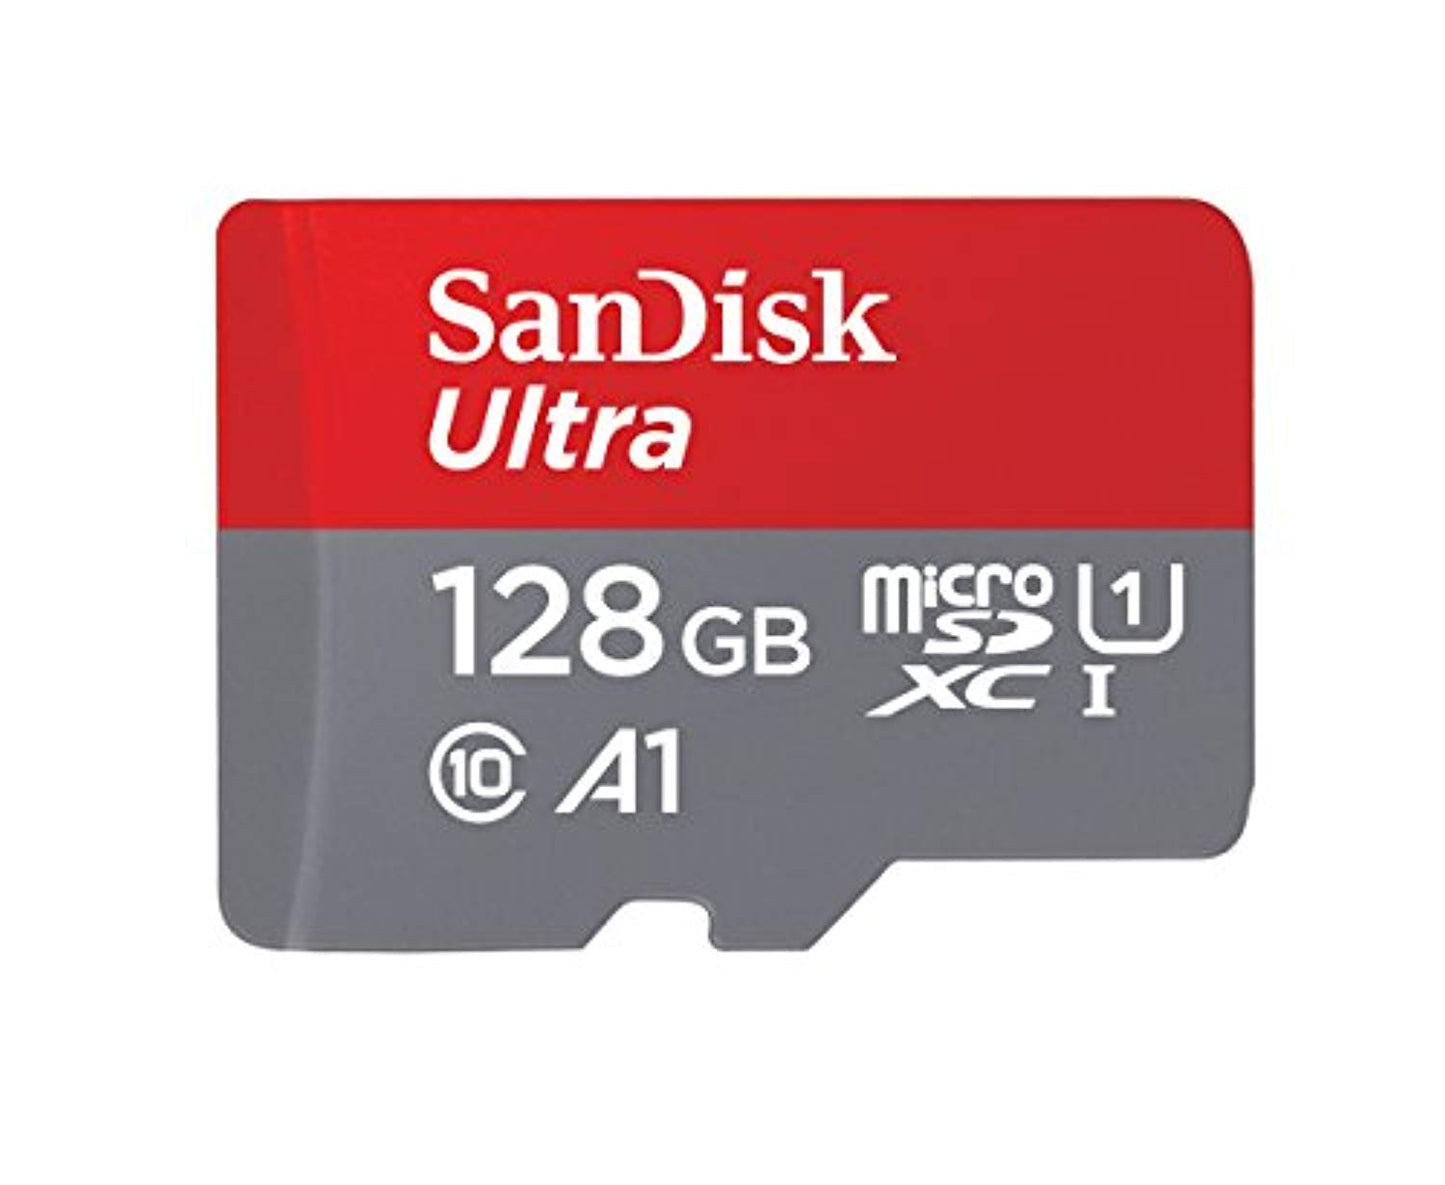 SanDisk Ultra 128 GB microSDXC Memory Card + SD Adapter - Offer Games